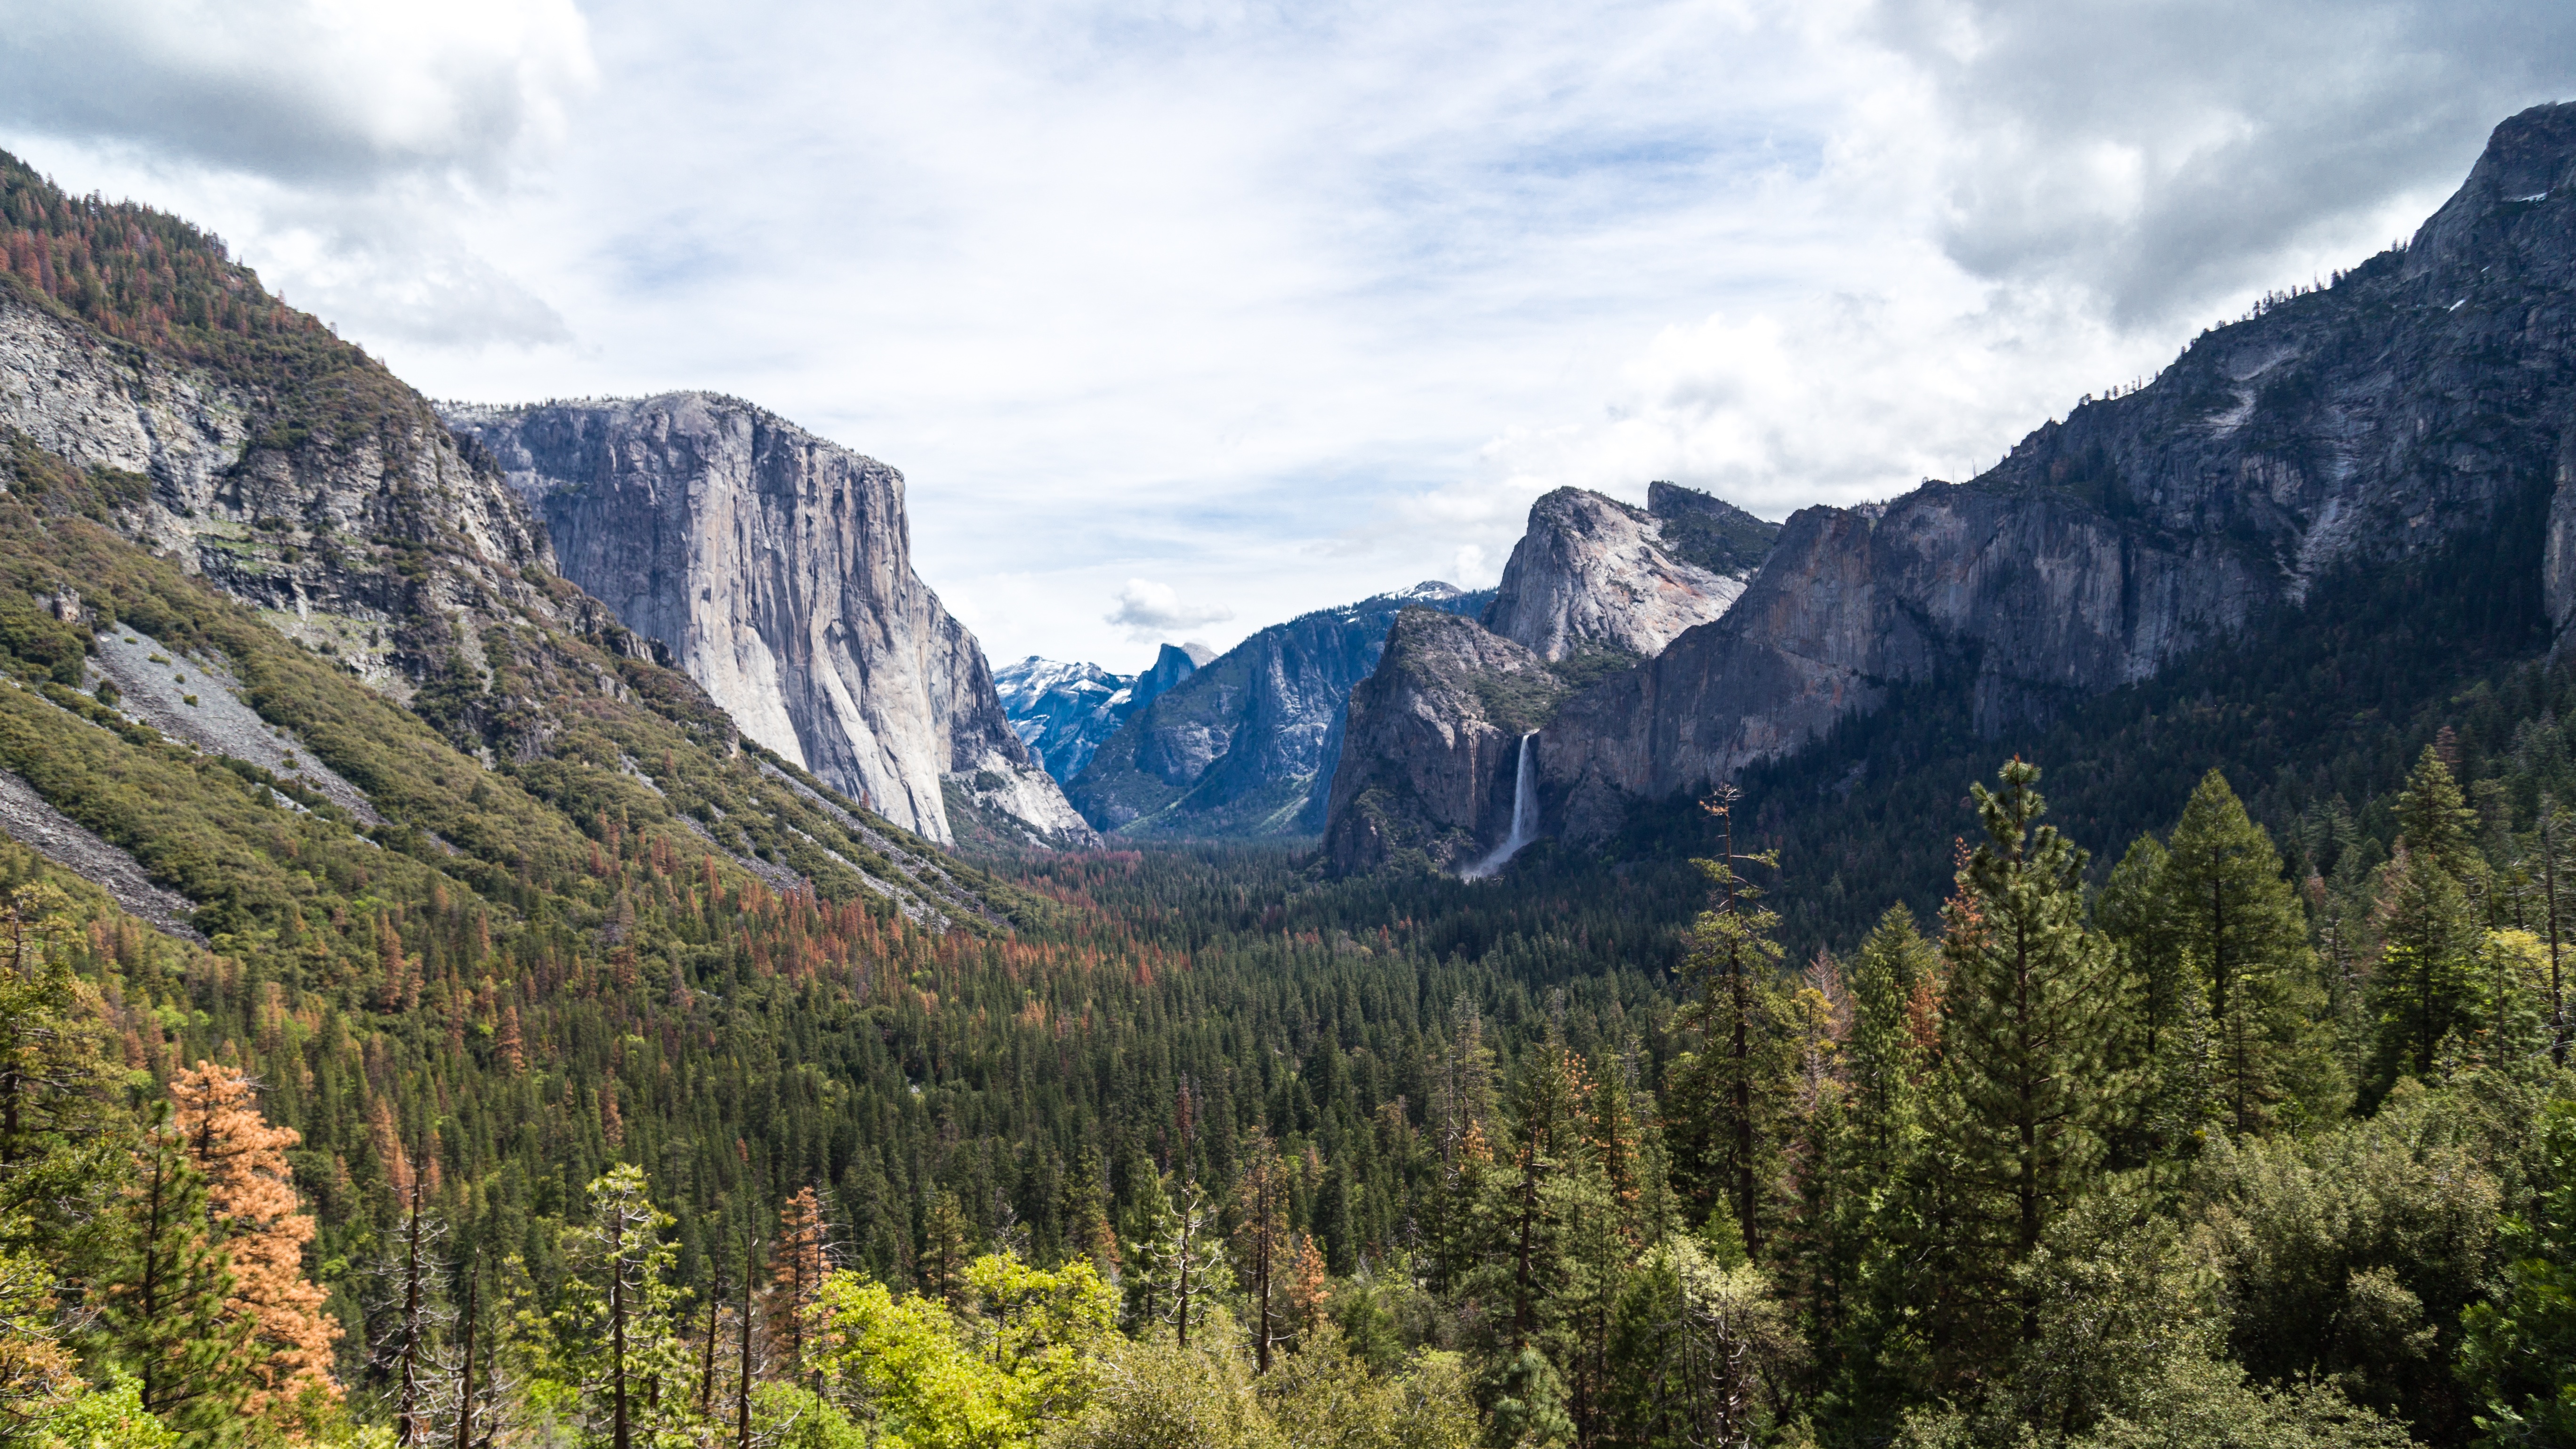 The mountains of Yosemite